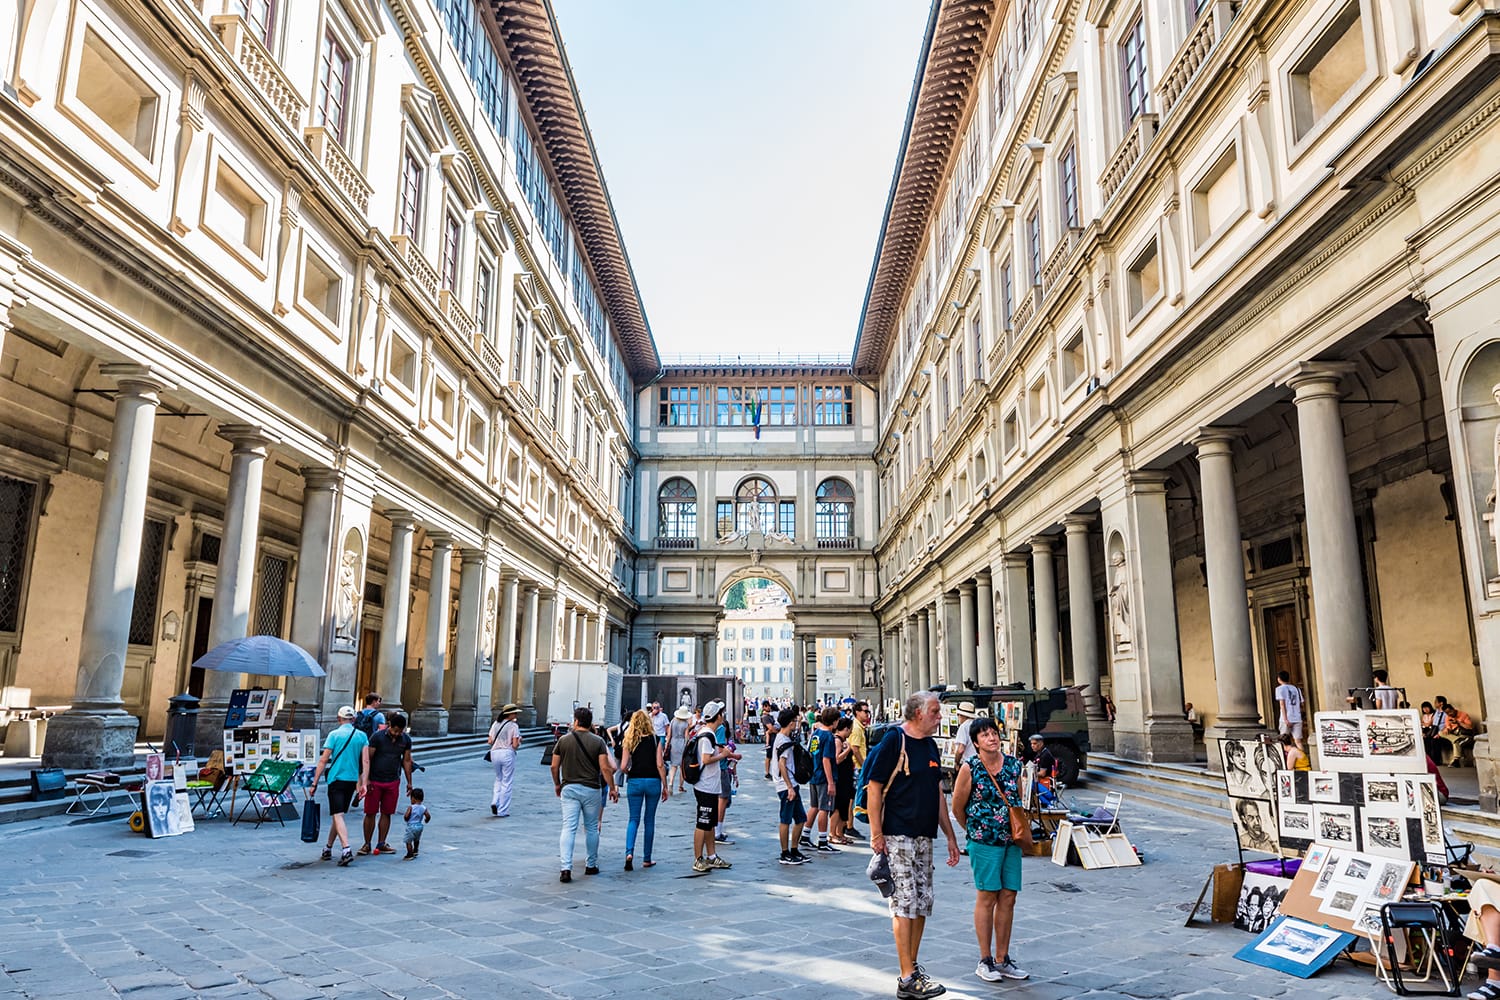 The Galleria degli Uffizi is a prominent art museum located adjacent to the Piazza della Signoria in the Historic Centre of Florence in the region of Tuscany, Italy.